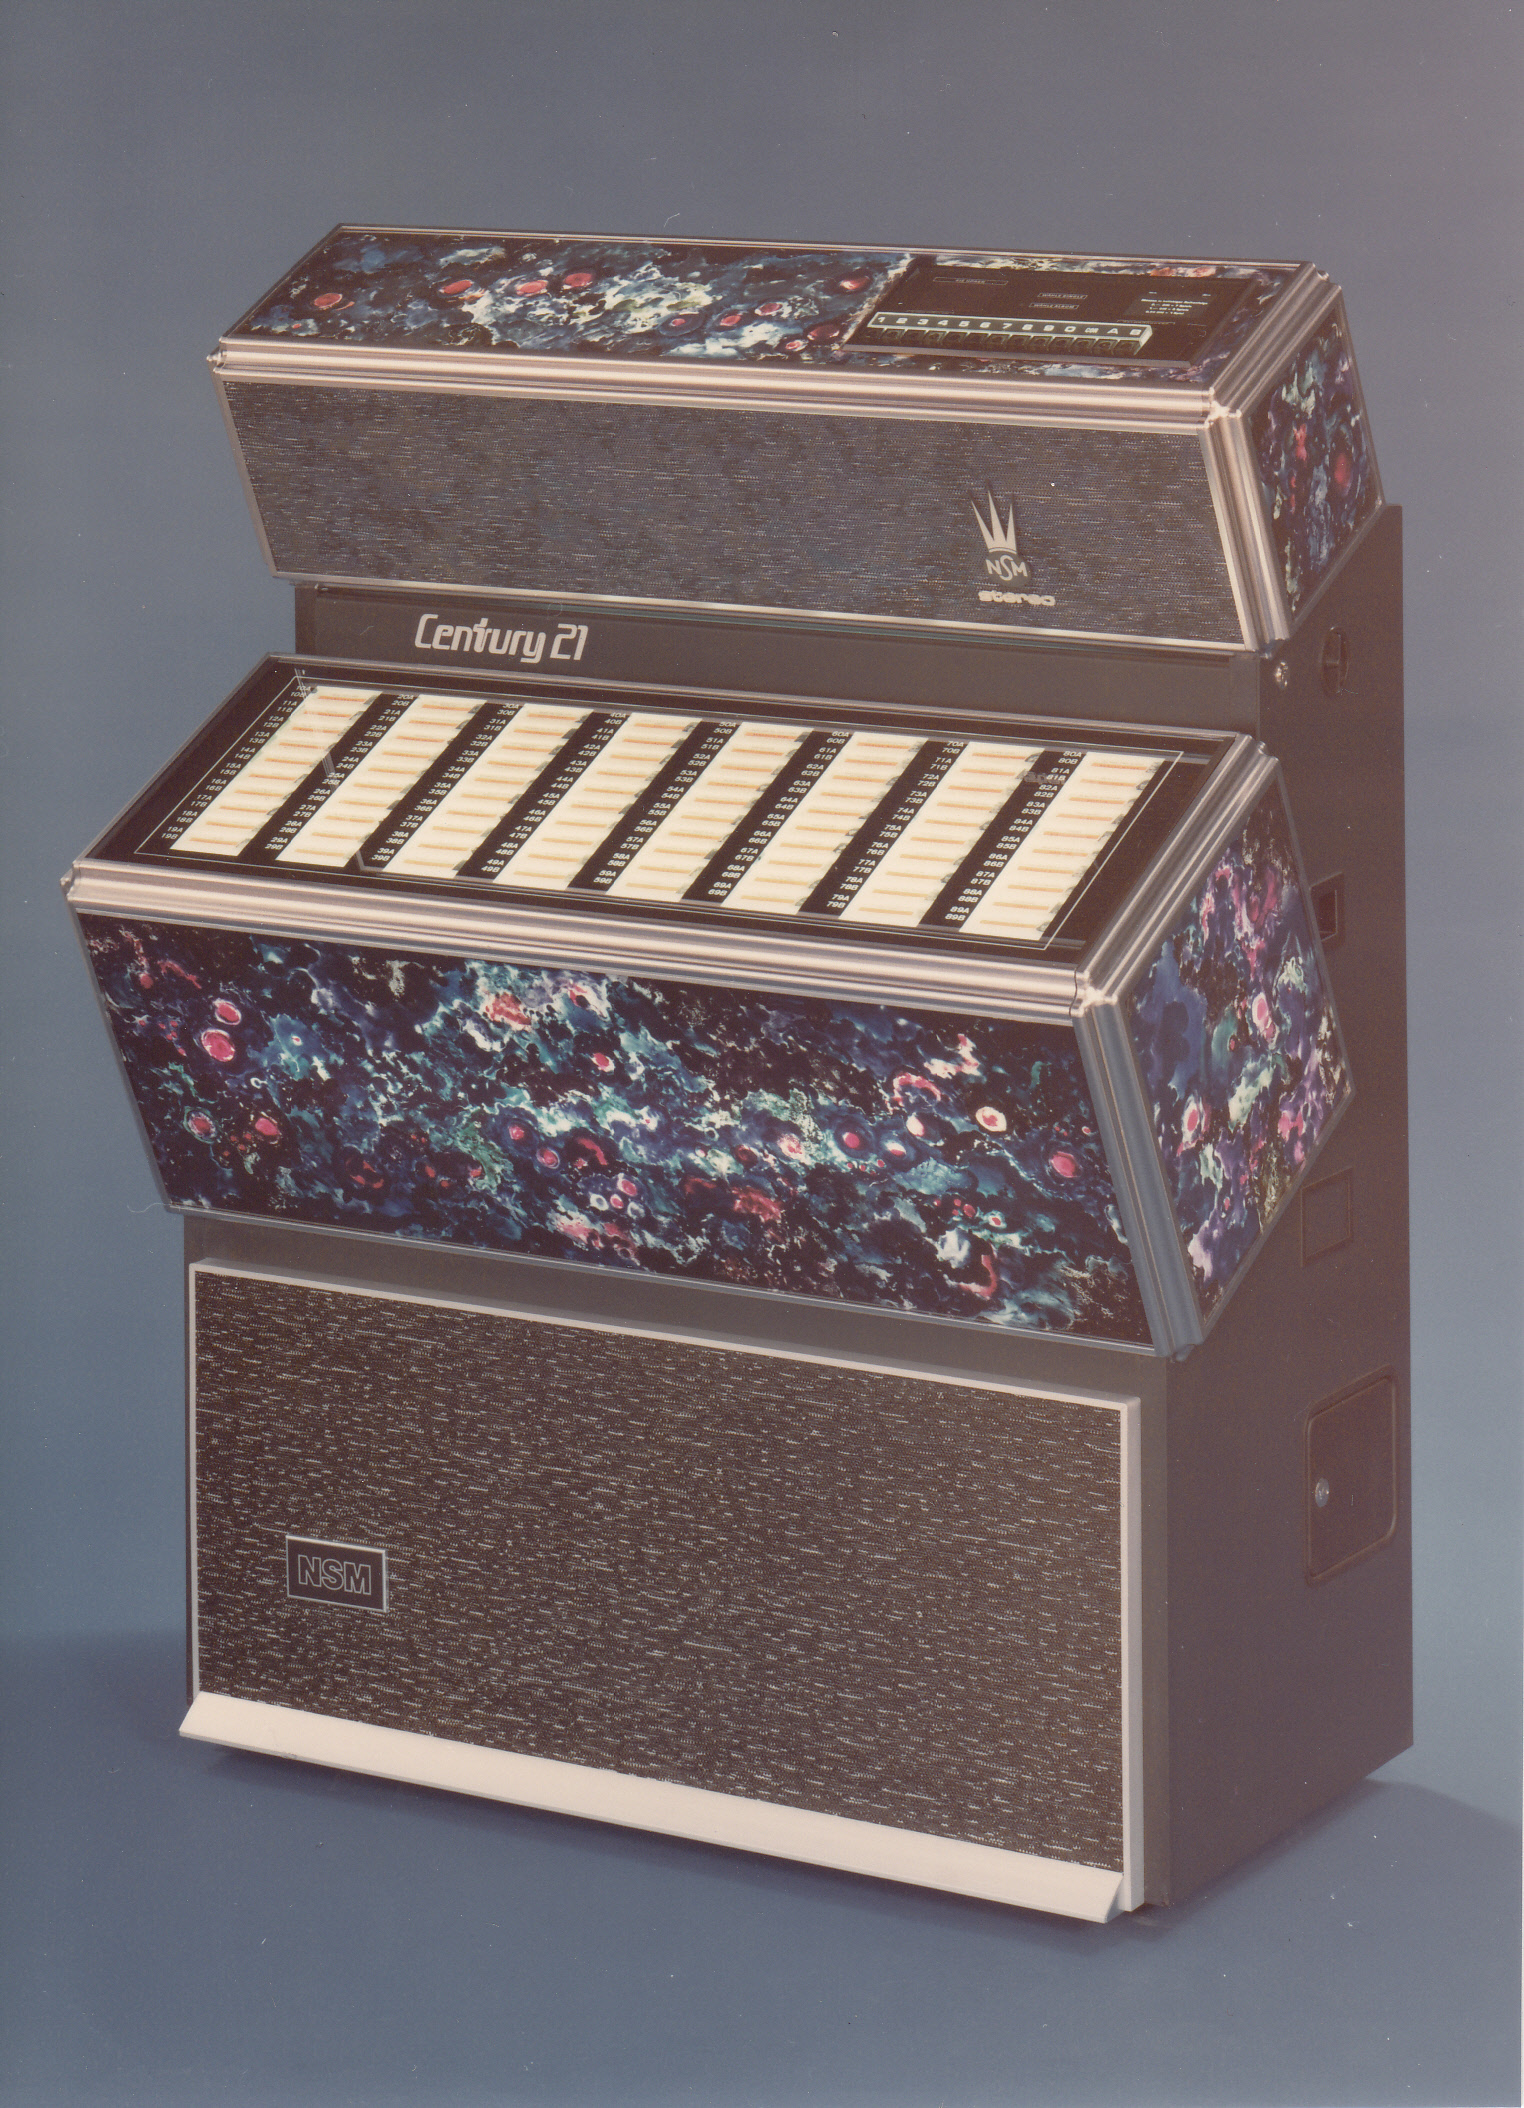 1977 century jukebox